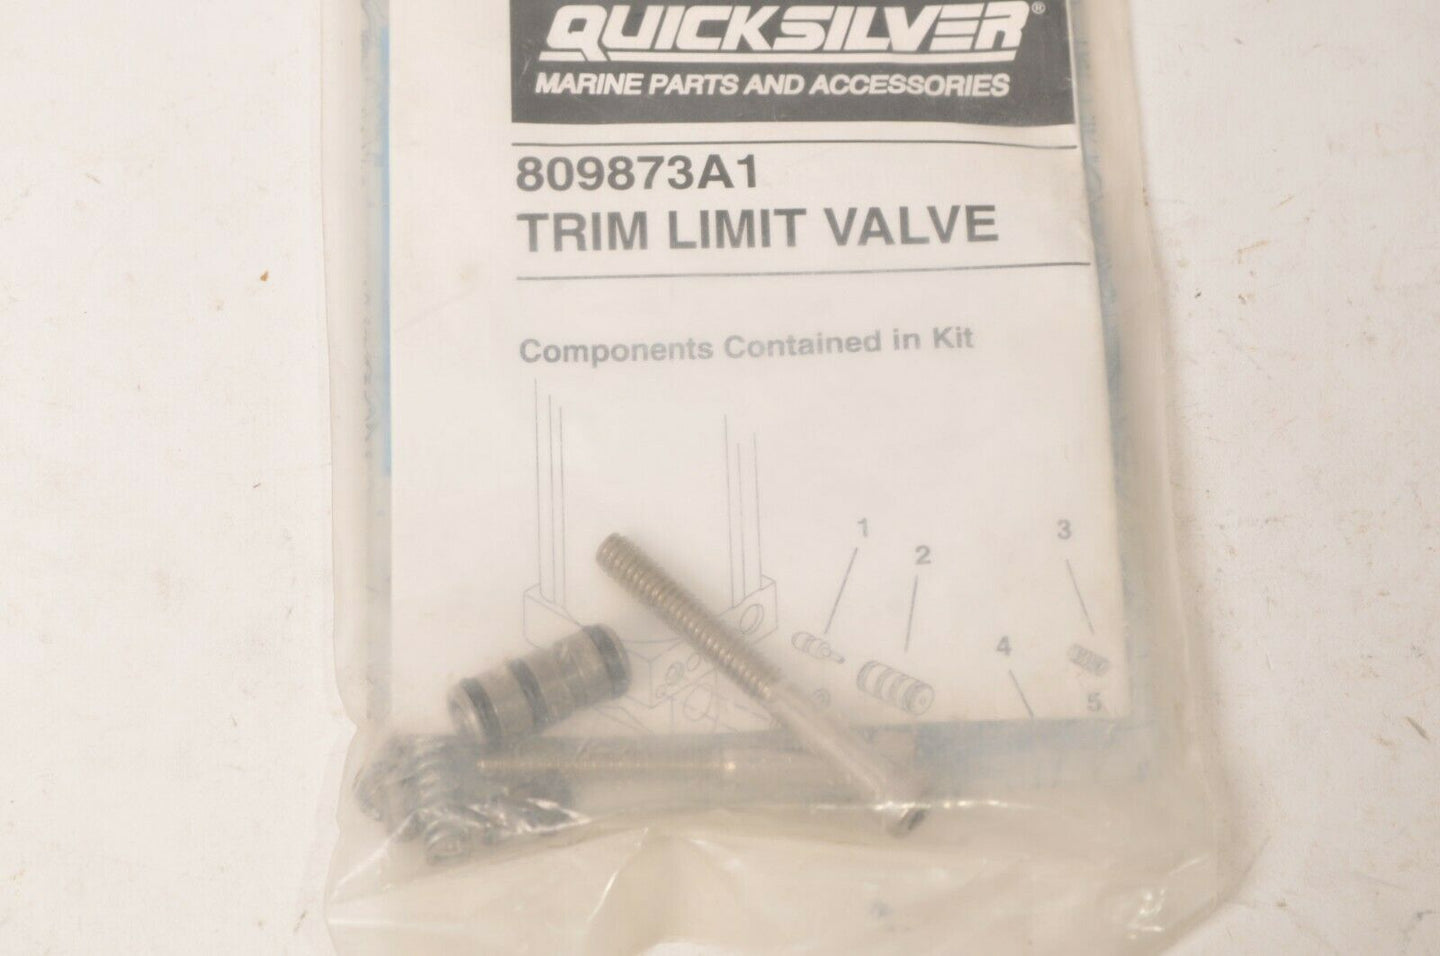 Mercury MerCruiser Quicksilver Trim Limit Valve Kit | 809873A2